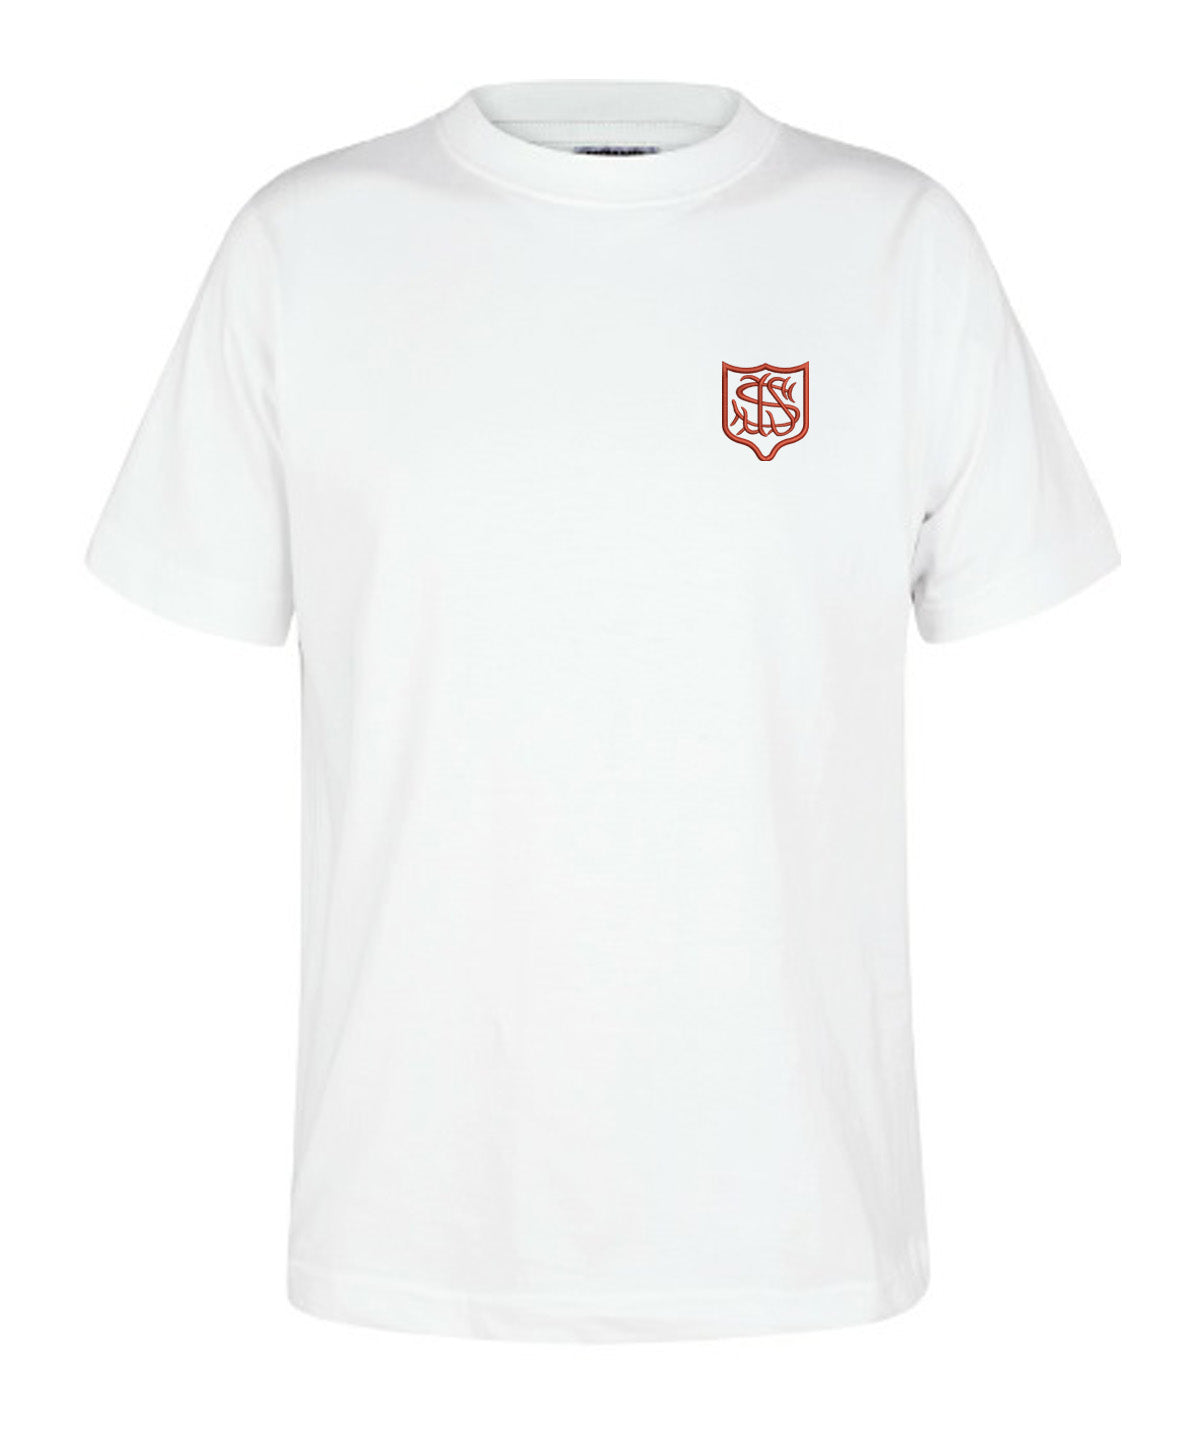 St Joseph's Primary School Linlithgow - Cotton Unisex T-Shirt - White